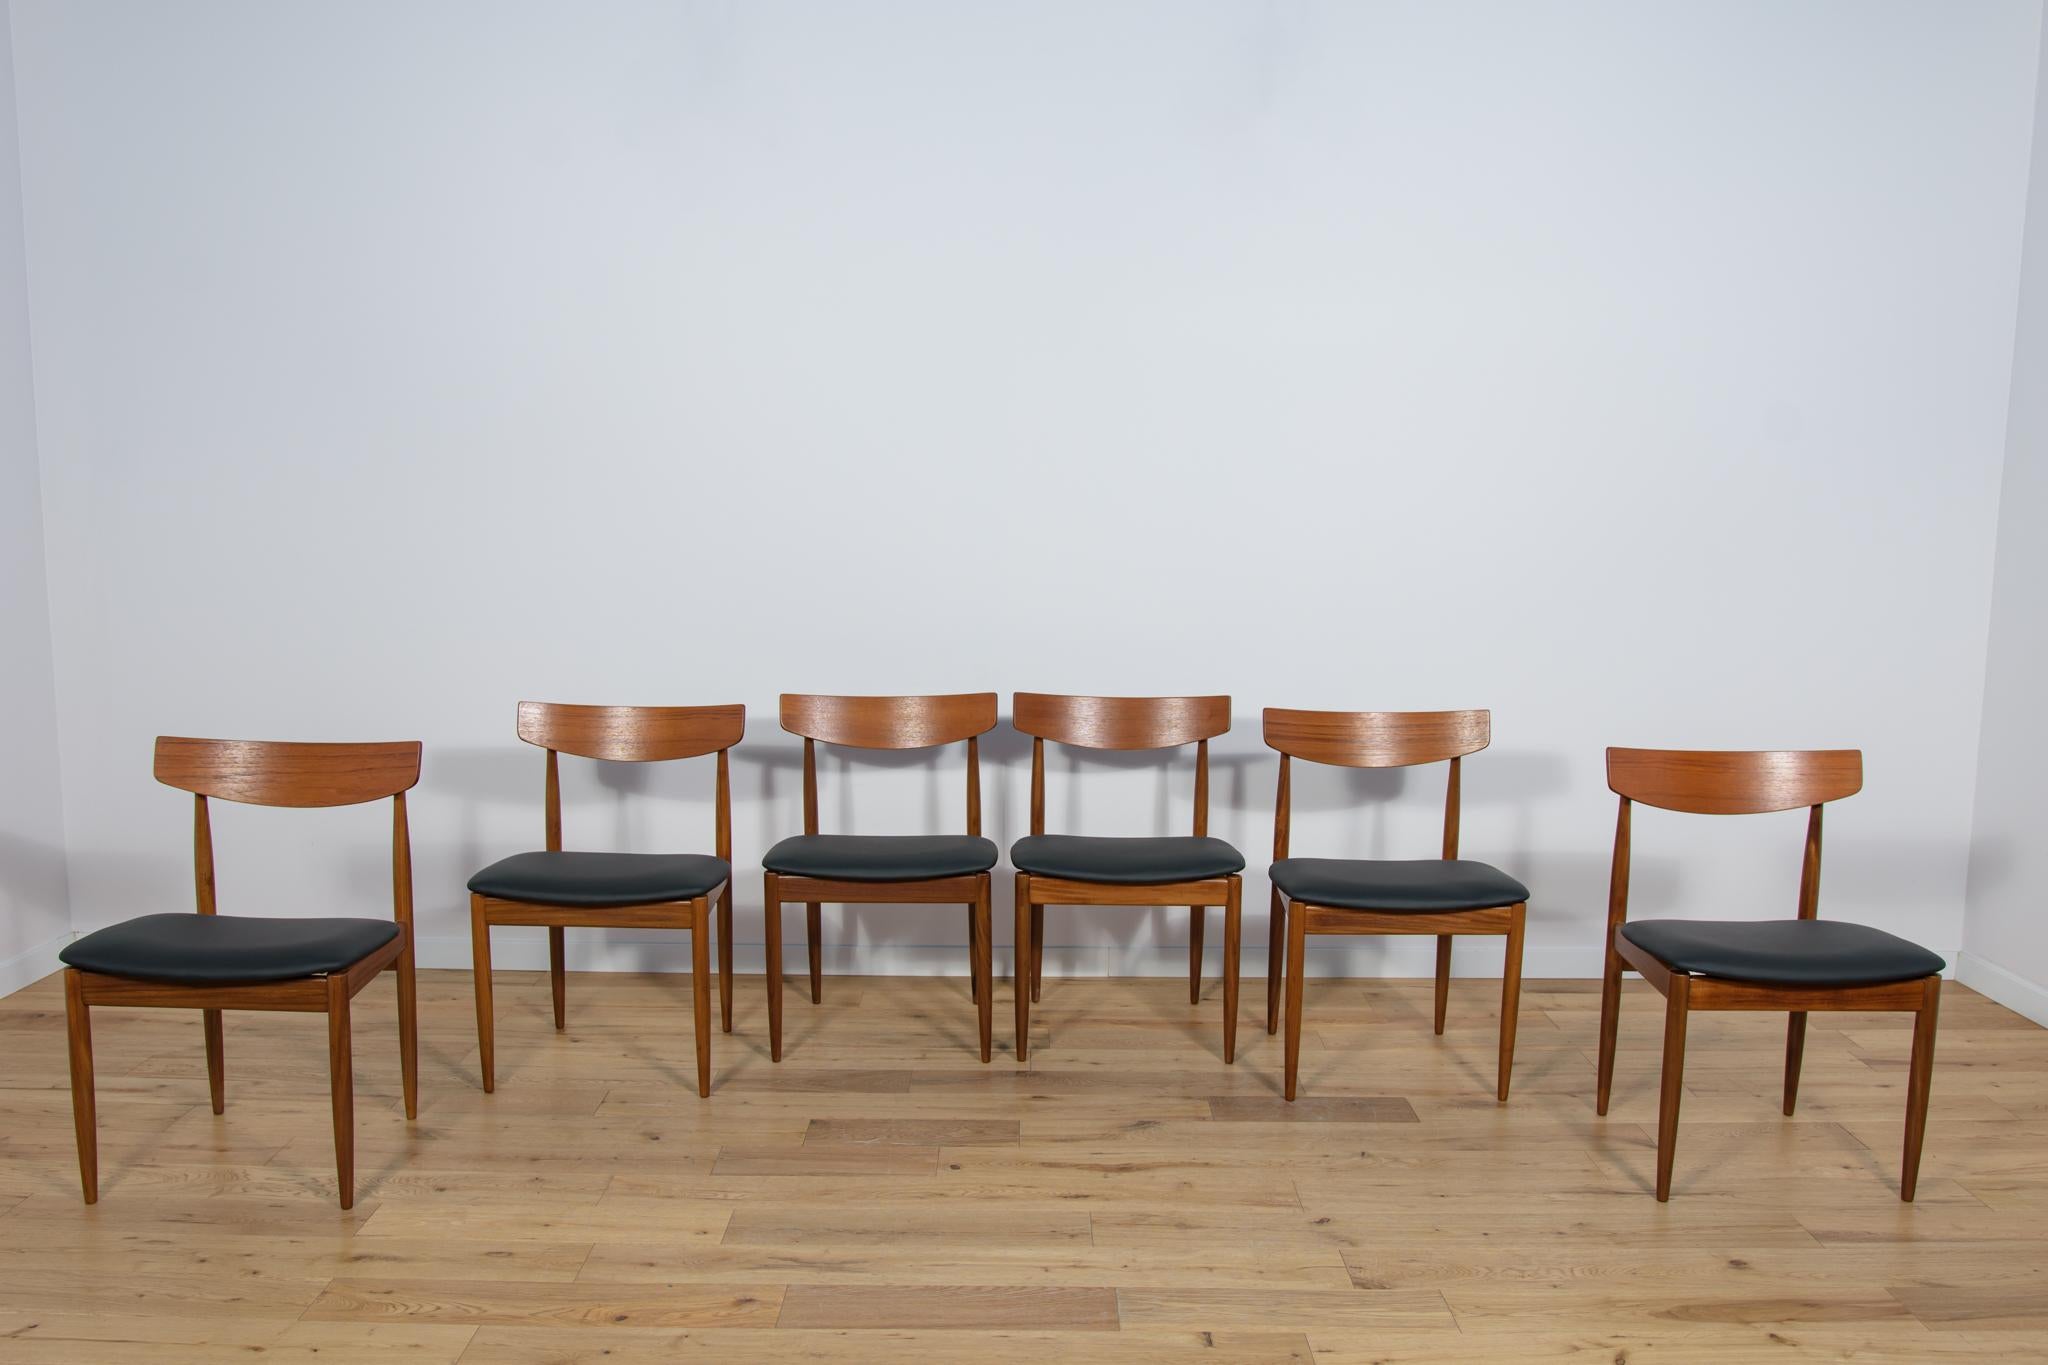 British Mid-Century Dining Chairs in Teak by Ib Kofod Larsen for G-Plan, 1960s.